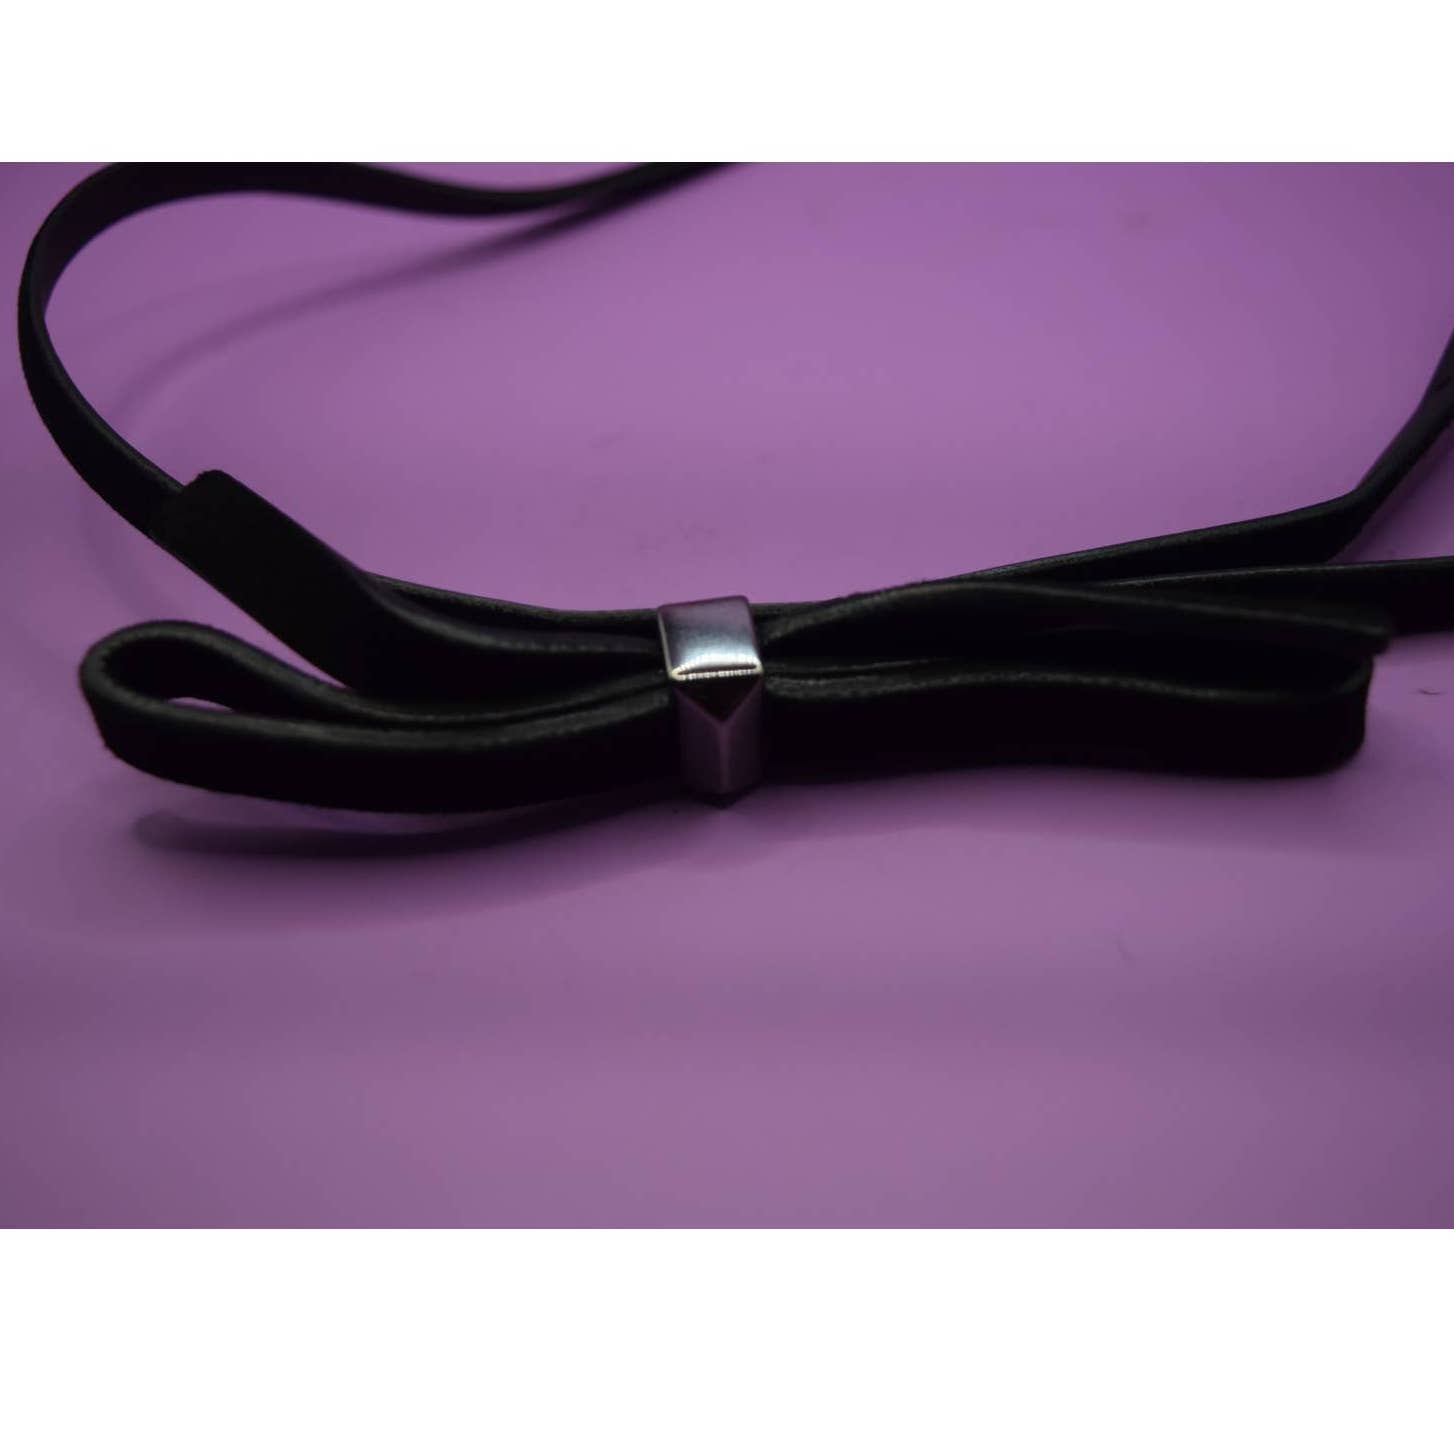 MaxMara Black Suede Leather Bow Belt - L